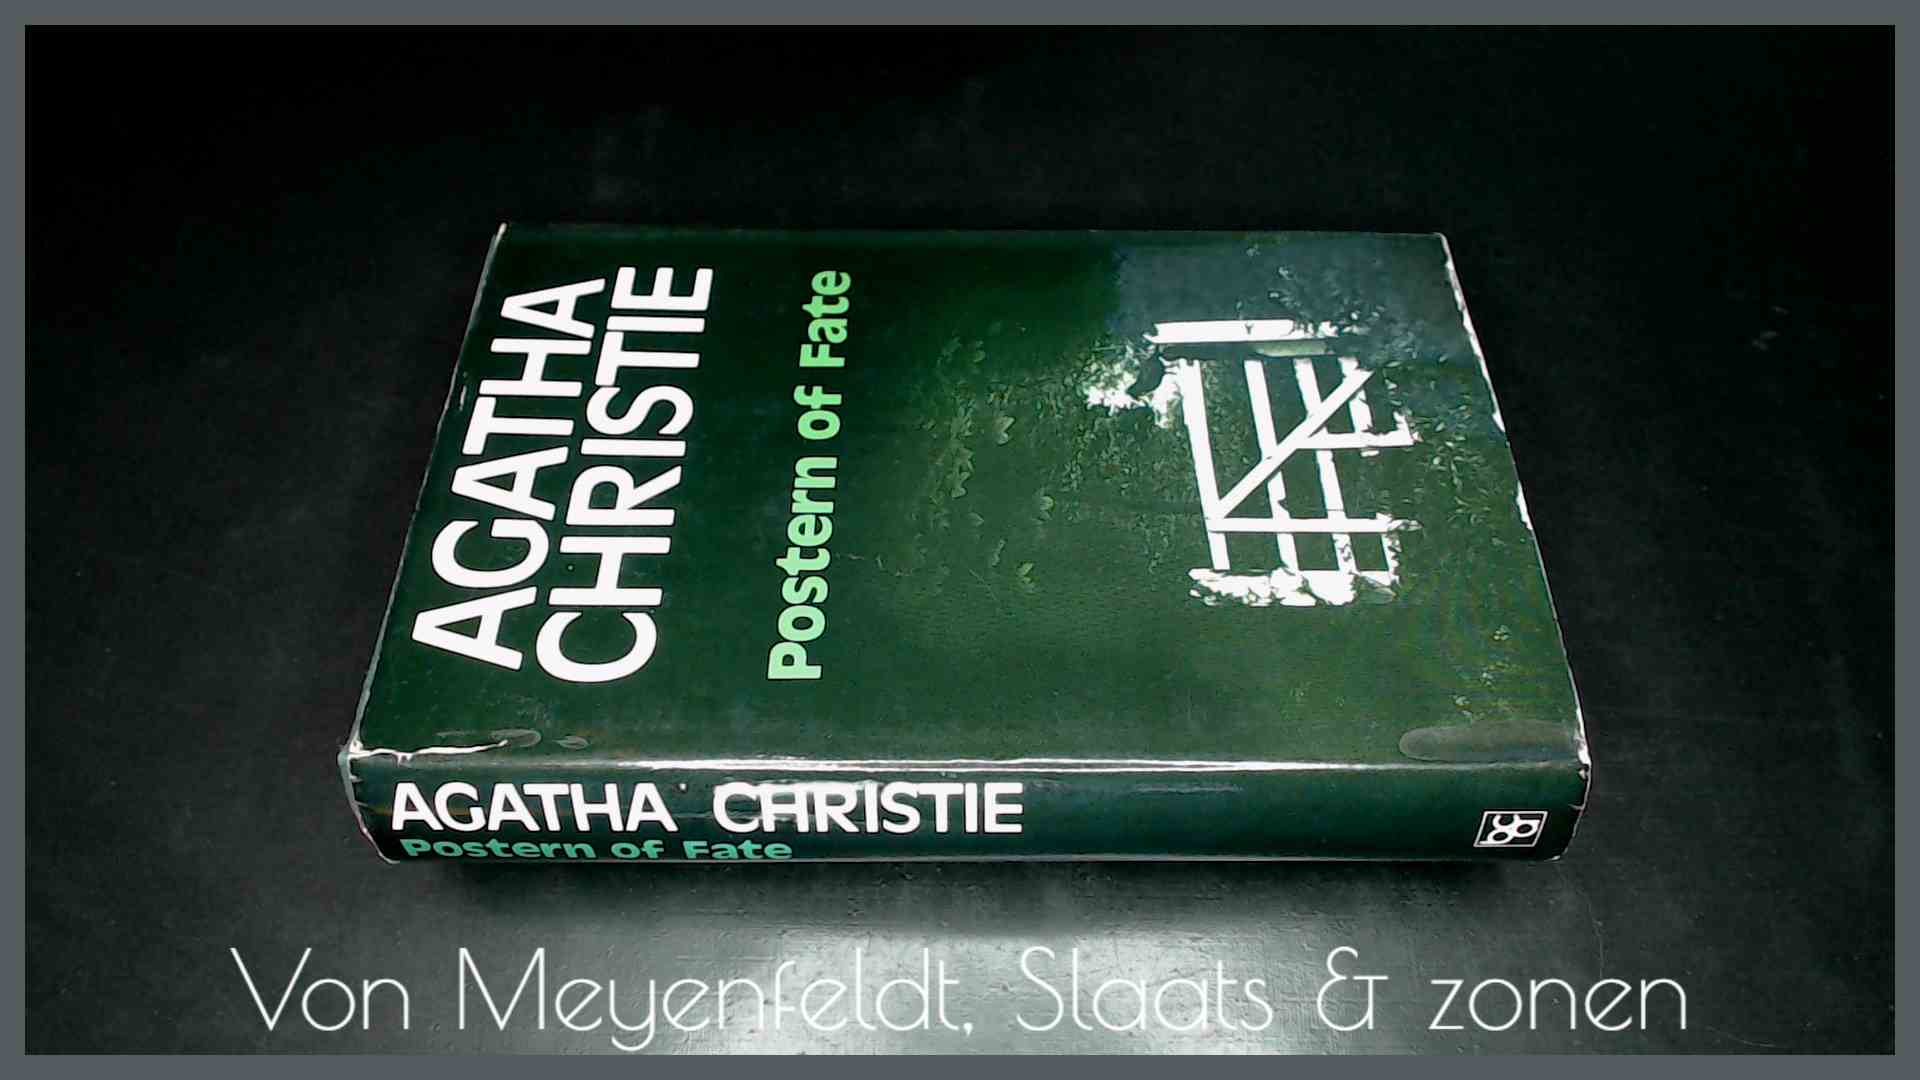 CHRISTIE, AGATHA - Postern of fate